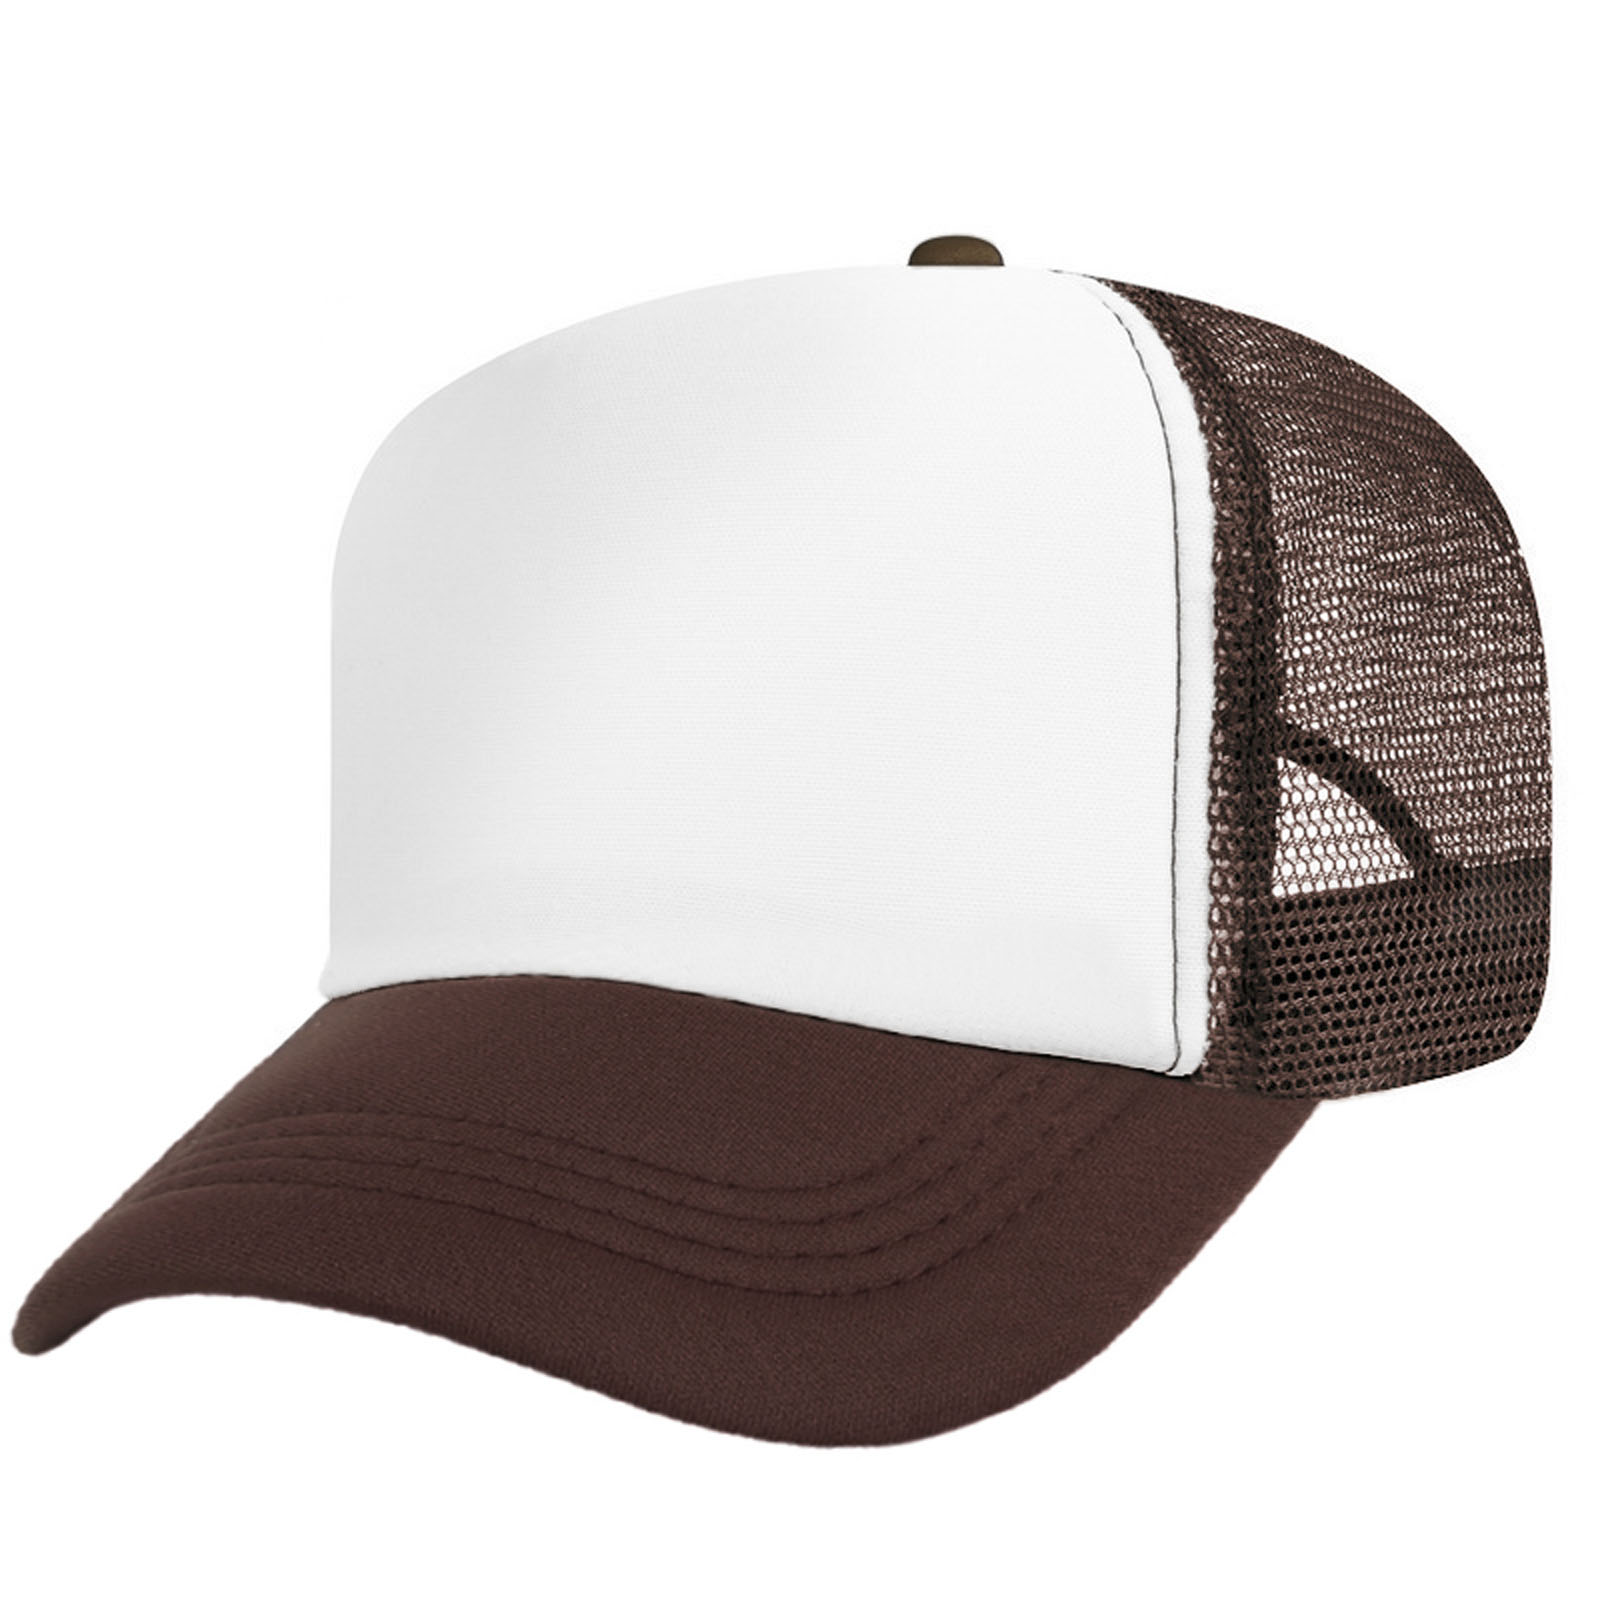 Toptie Adult 5 Panel Mid Profile Mesh Back Trucker Hat Foam Snapback Hat - Brown/White, One Size